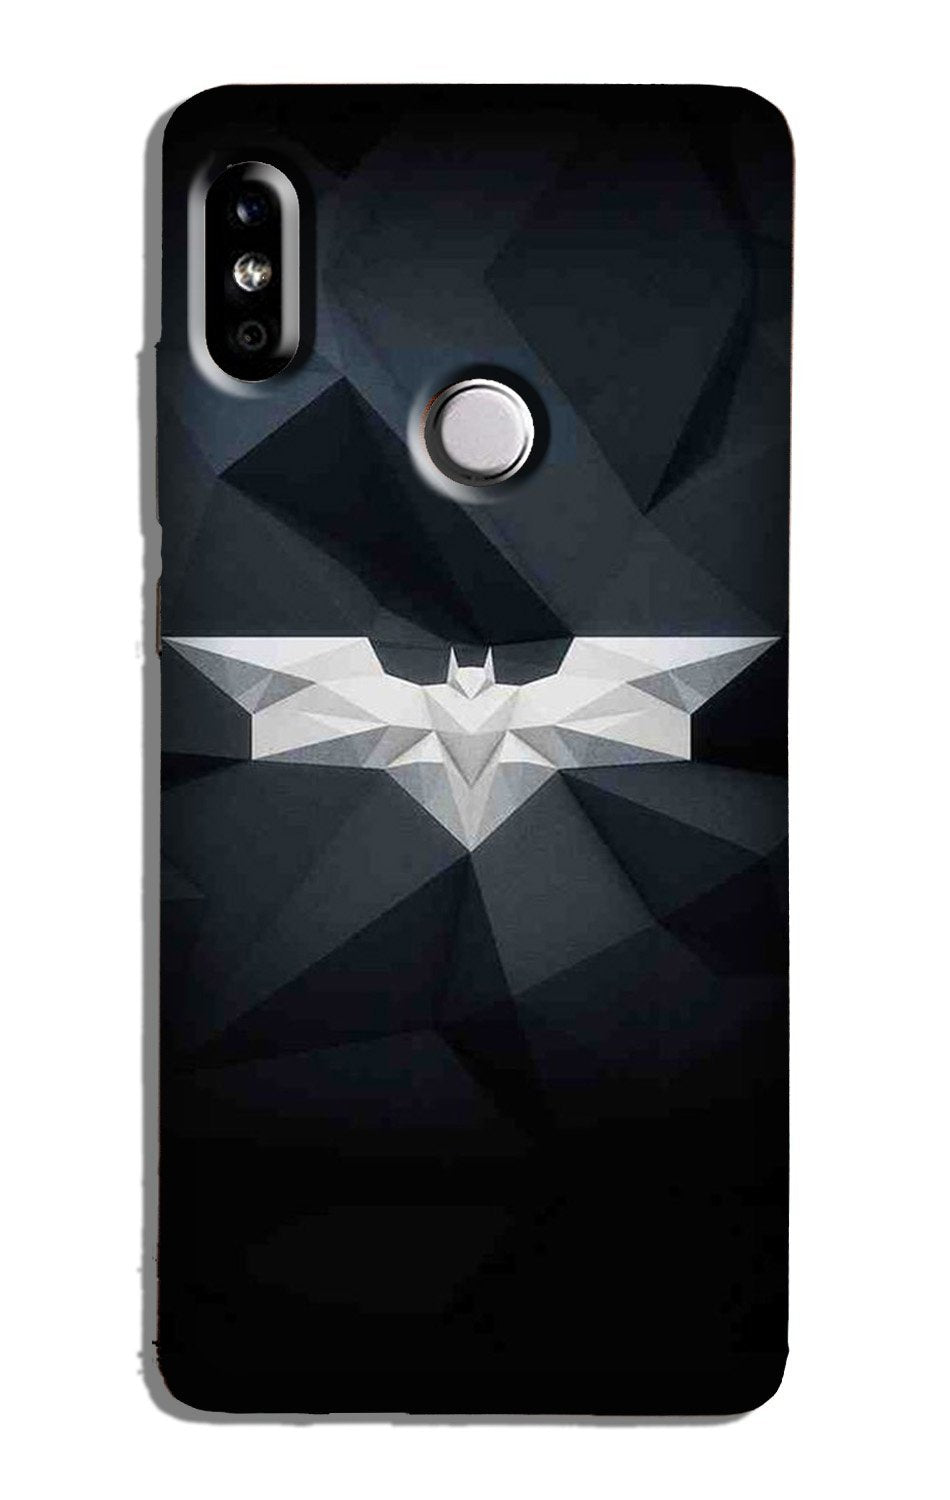 Batman Case for Xiaomi Redmi 7